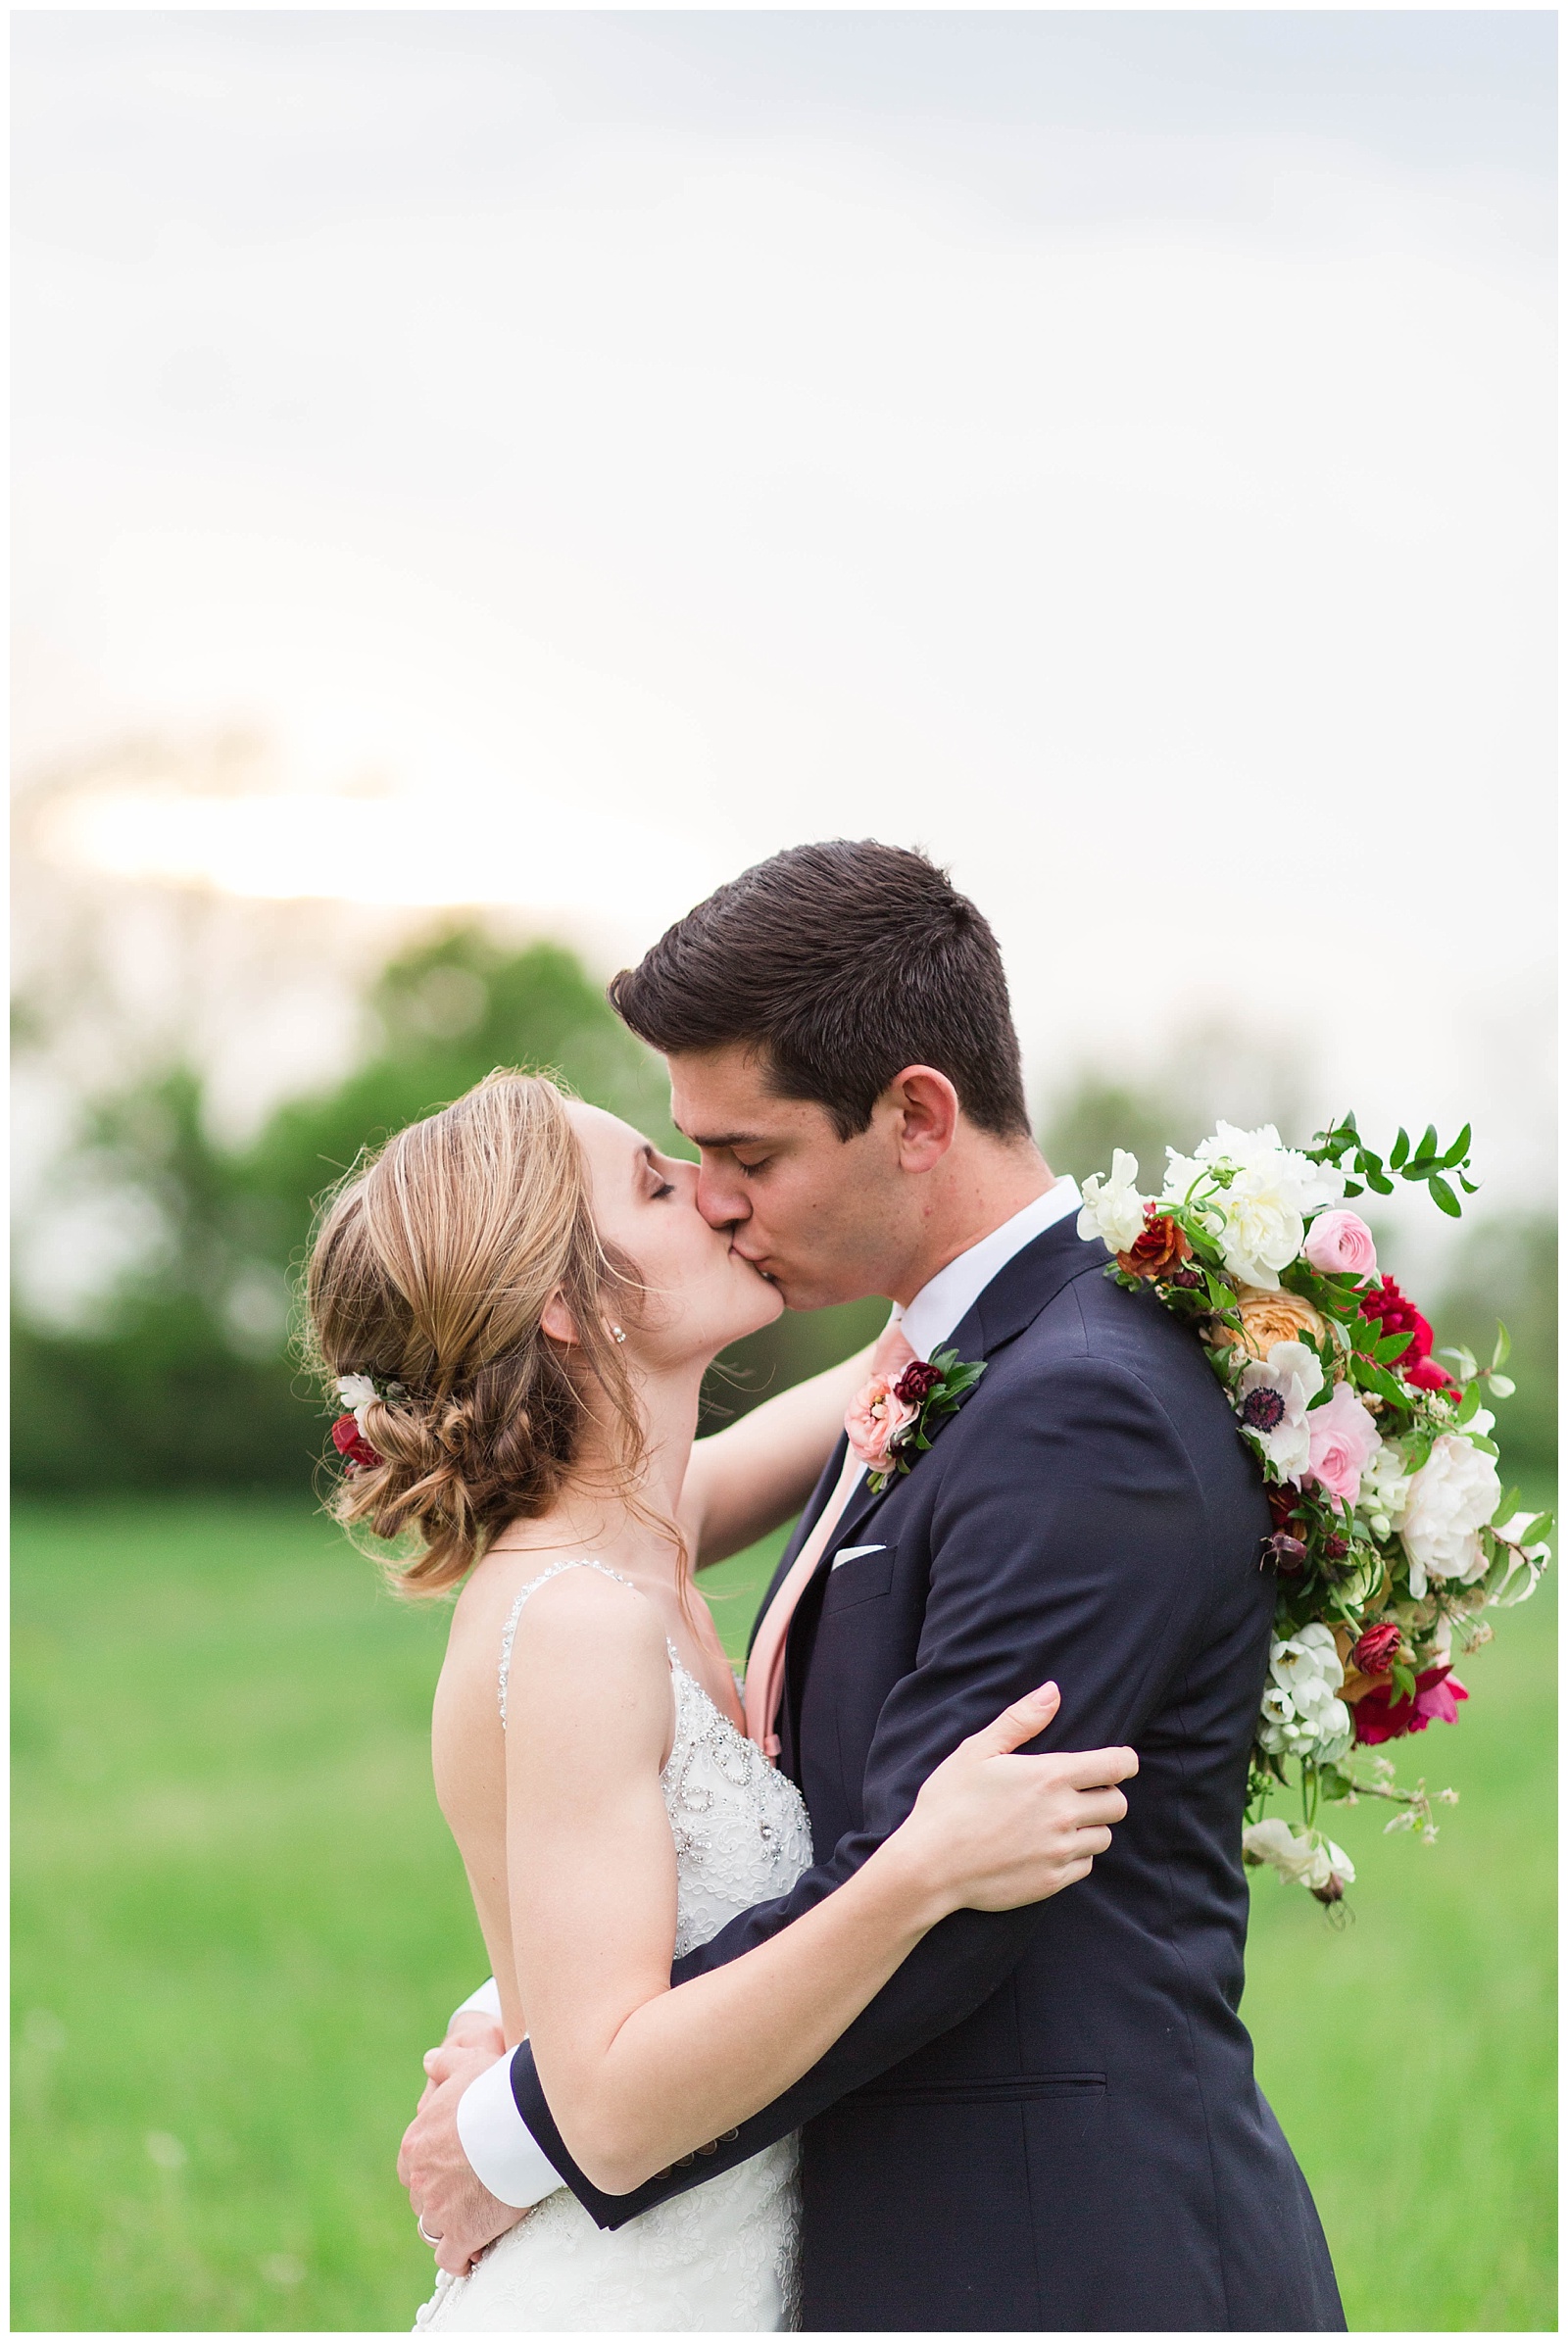 Romantic Wedding Inspiration | Monica Brown Photography | monicabrownphoto.com